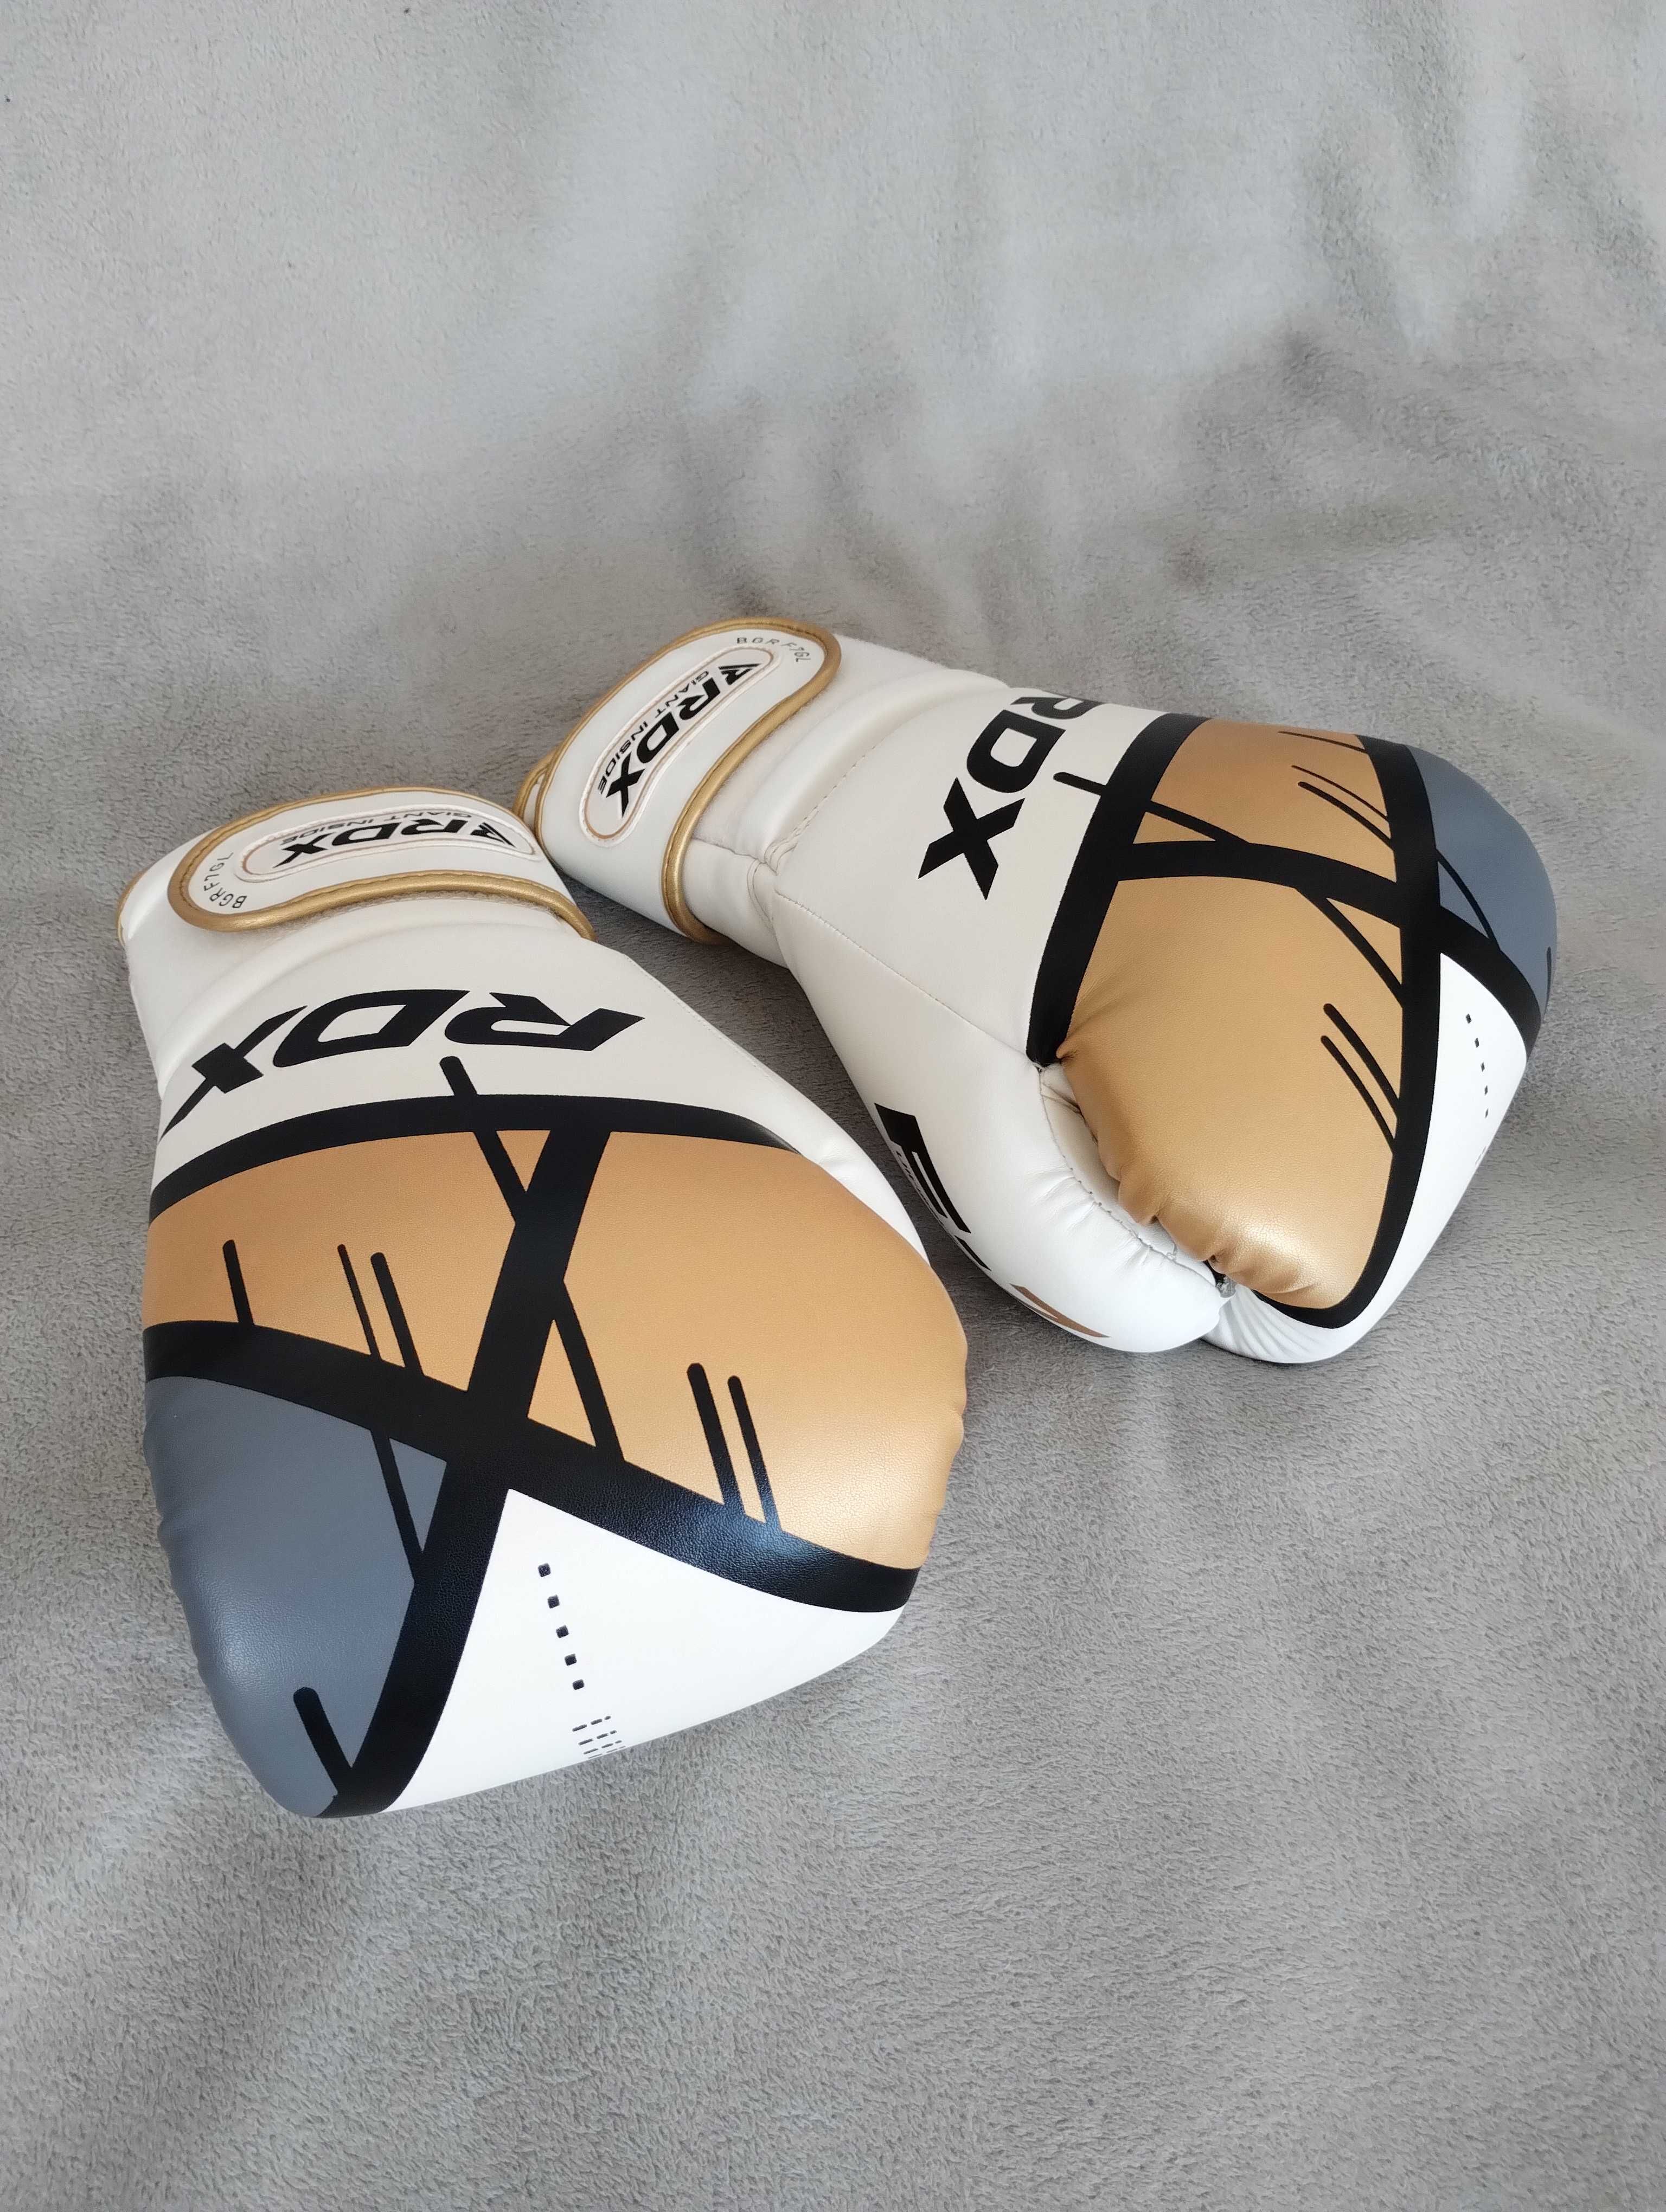 Боксерские перчатки RDX Rex Leather Gold 12 унций